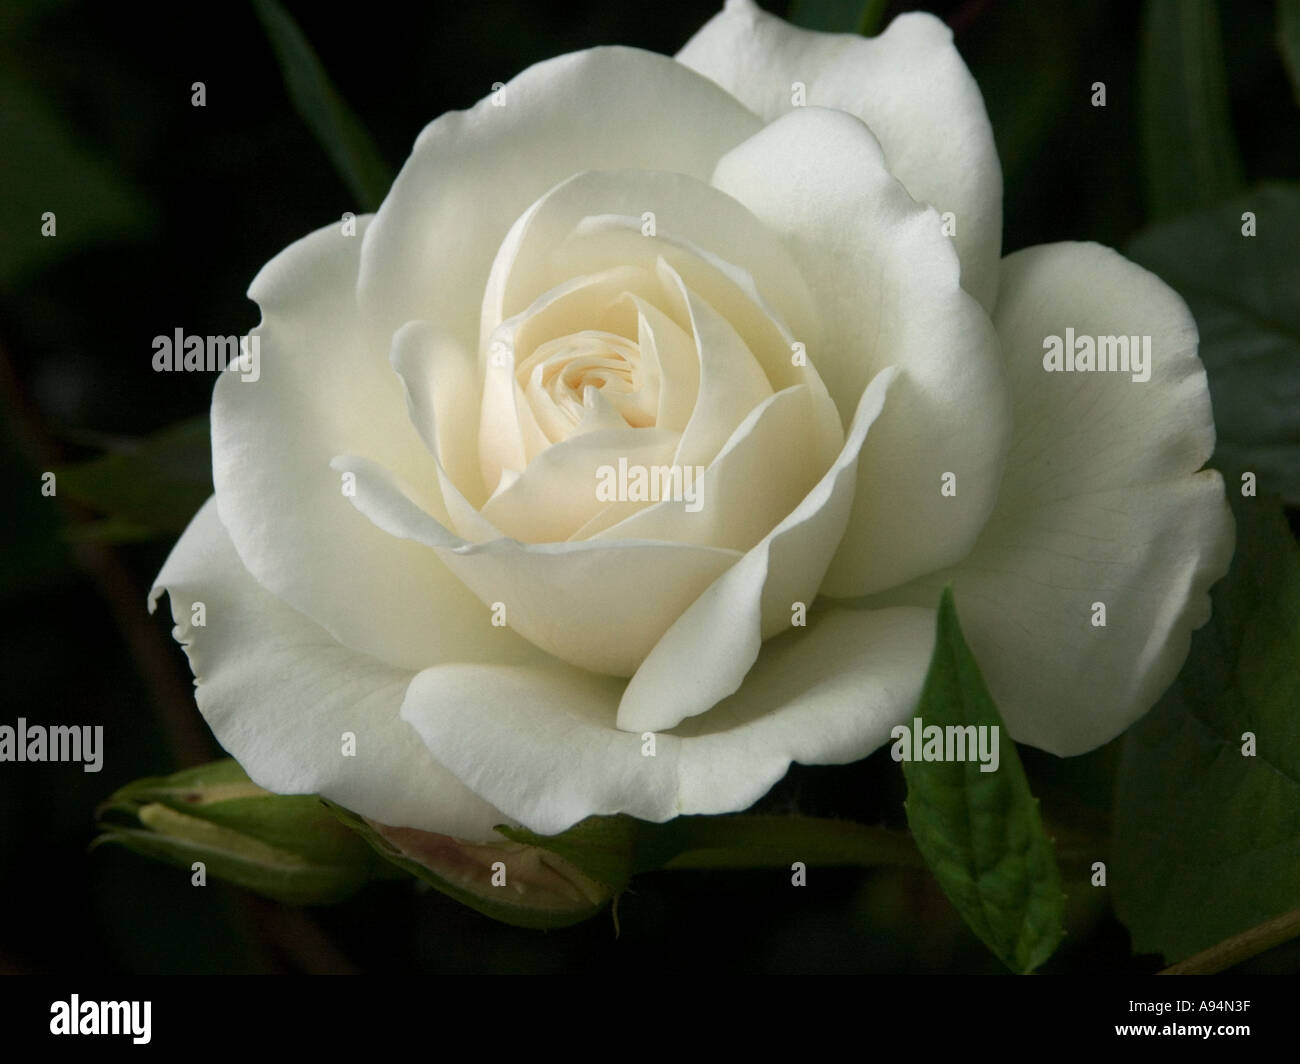 White Rose against a dark background Stock Photo